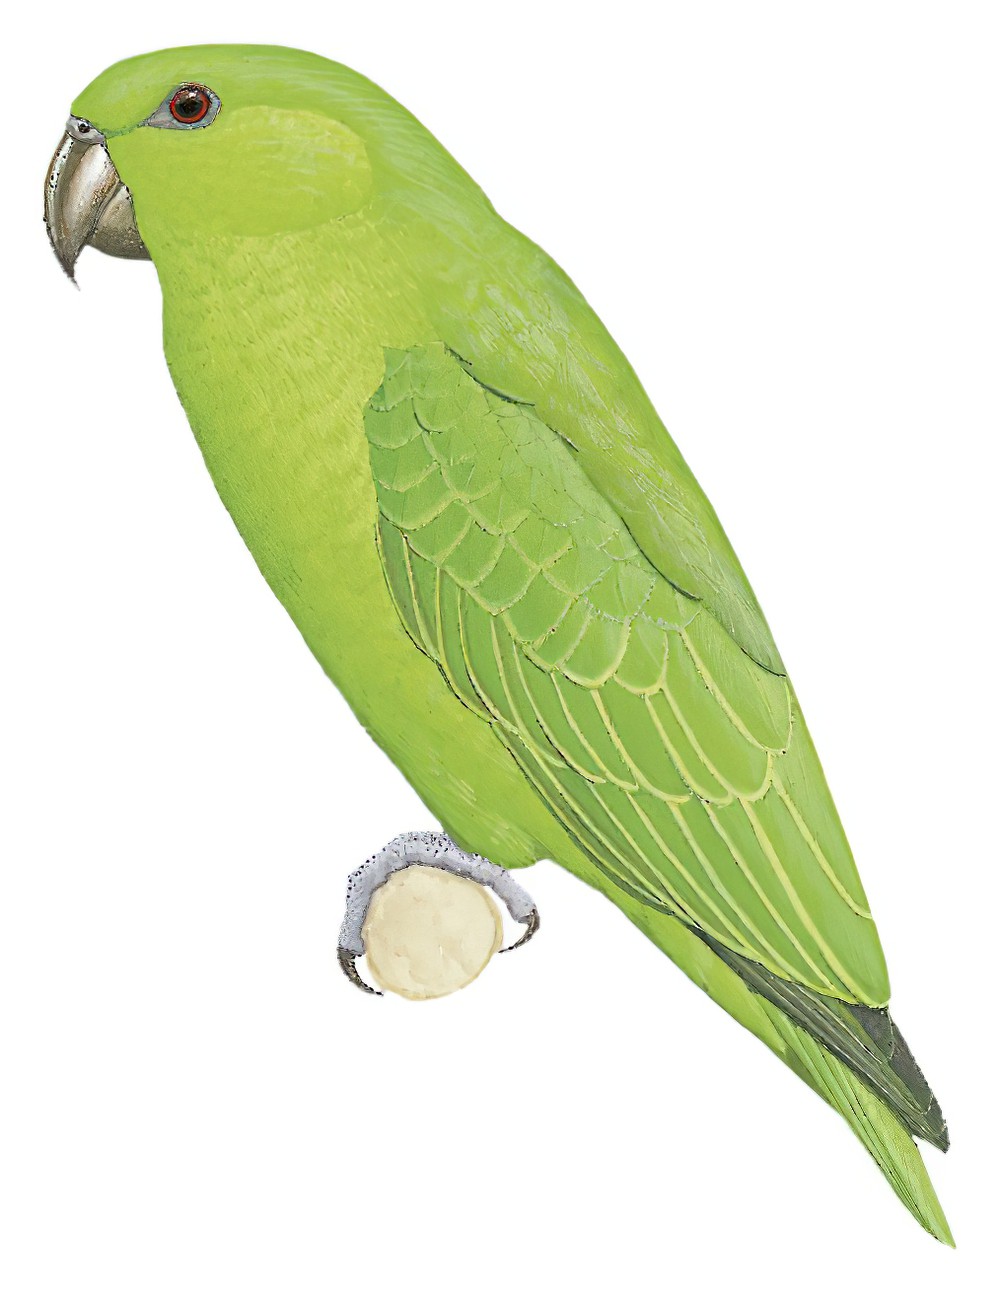 Short-tailed Parrot / Graydidascalus brachyurus